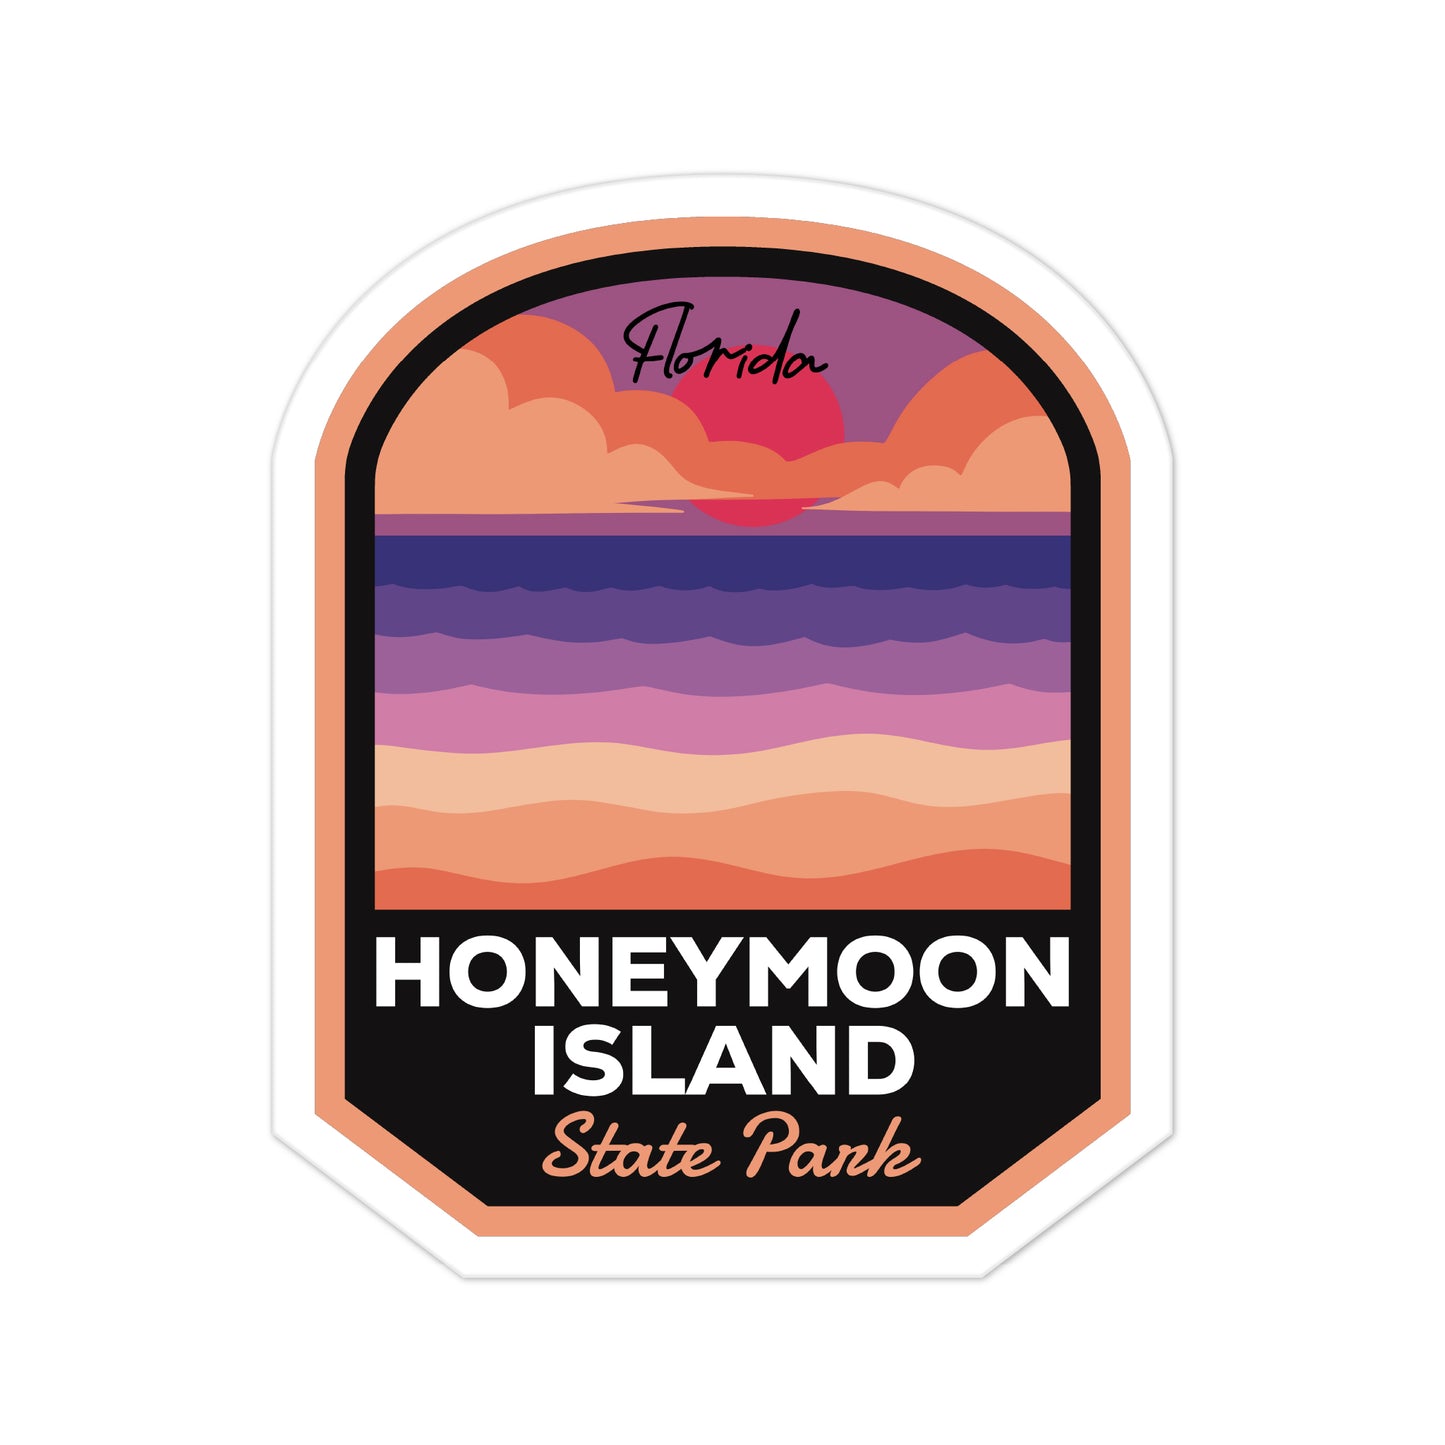 A sticker of Honeymoon Island State Park